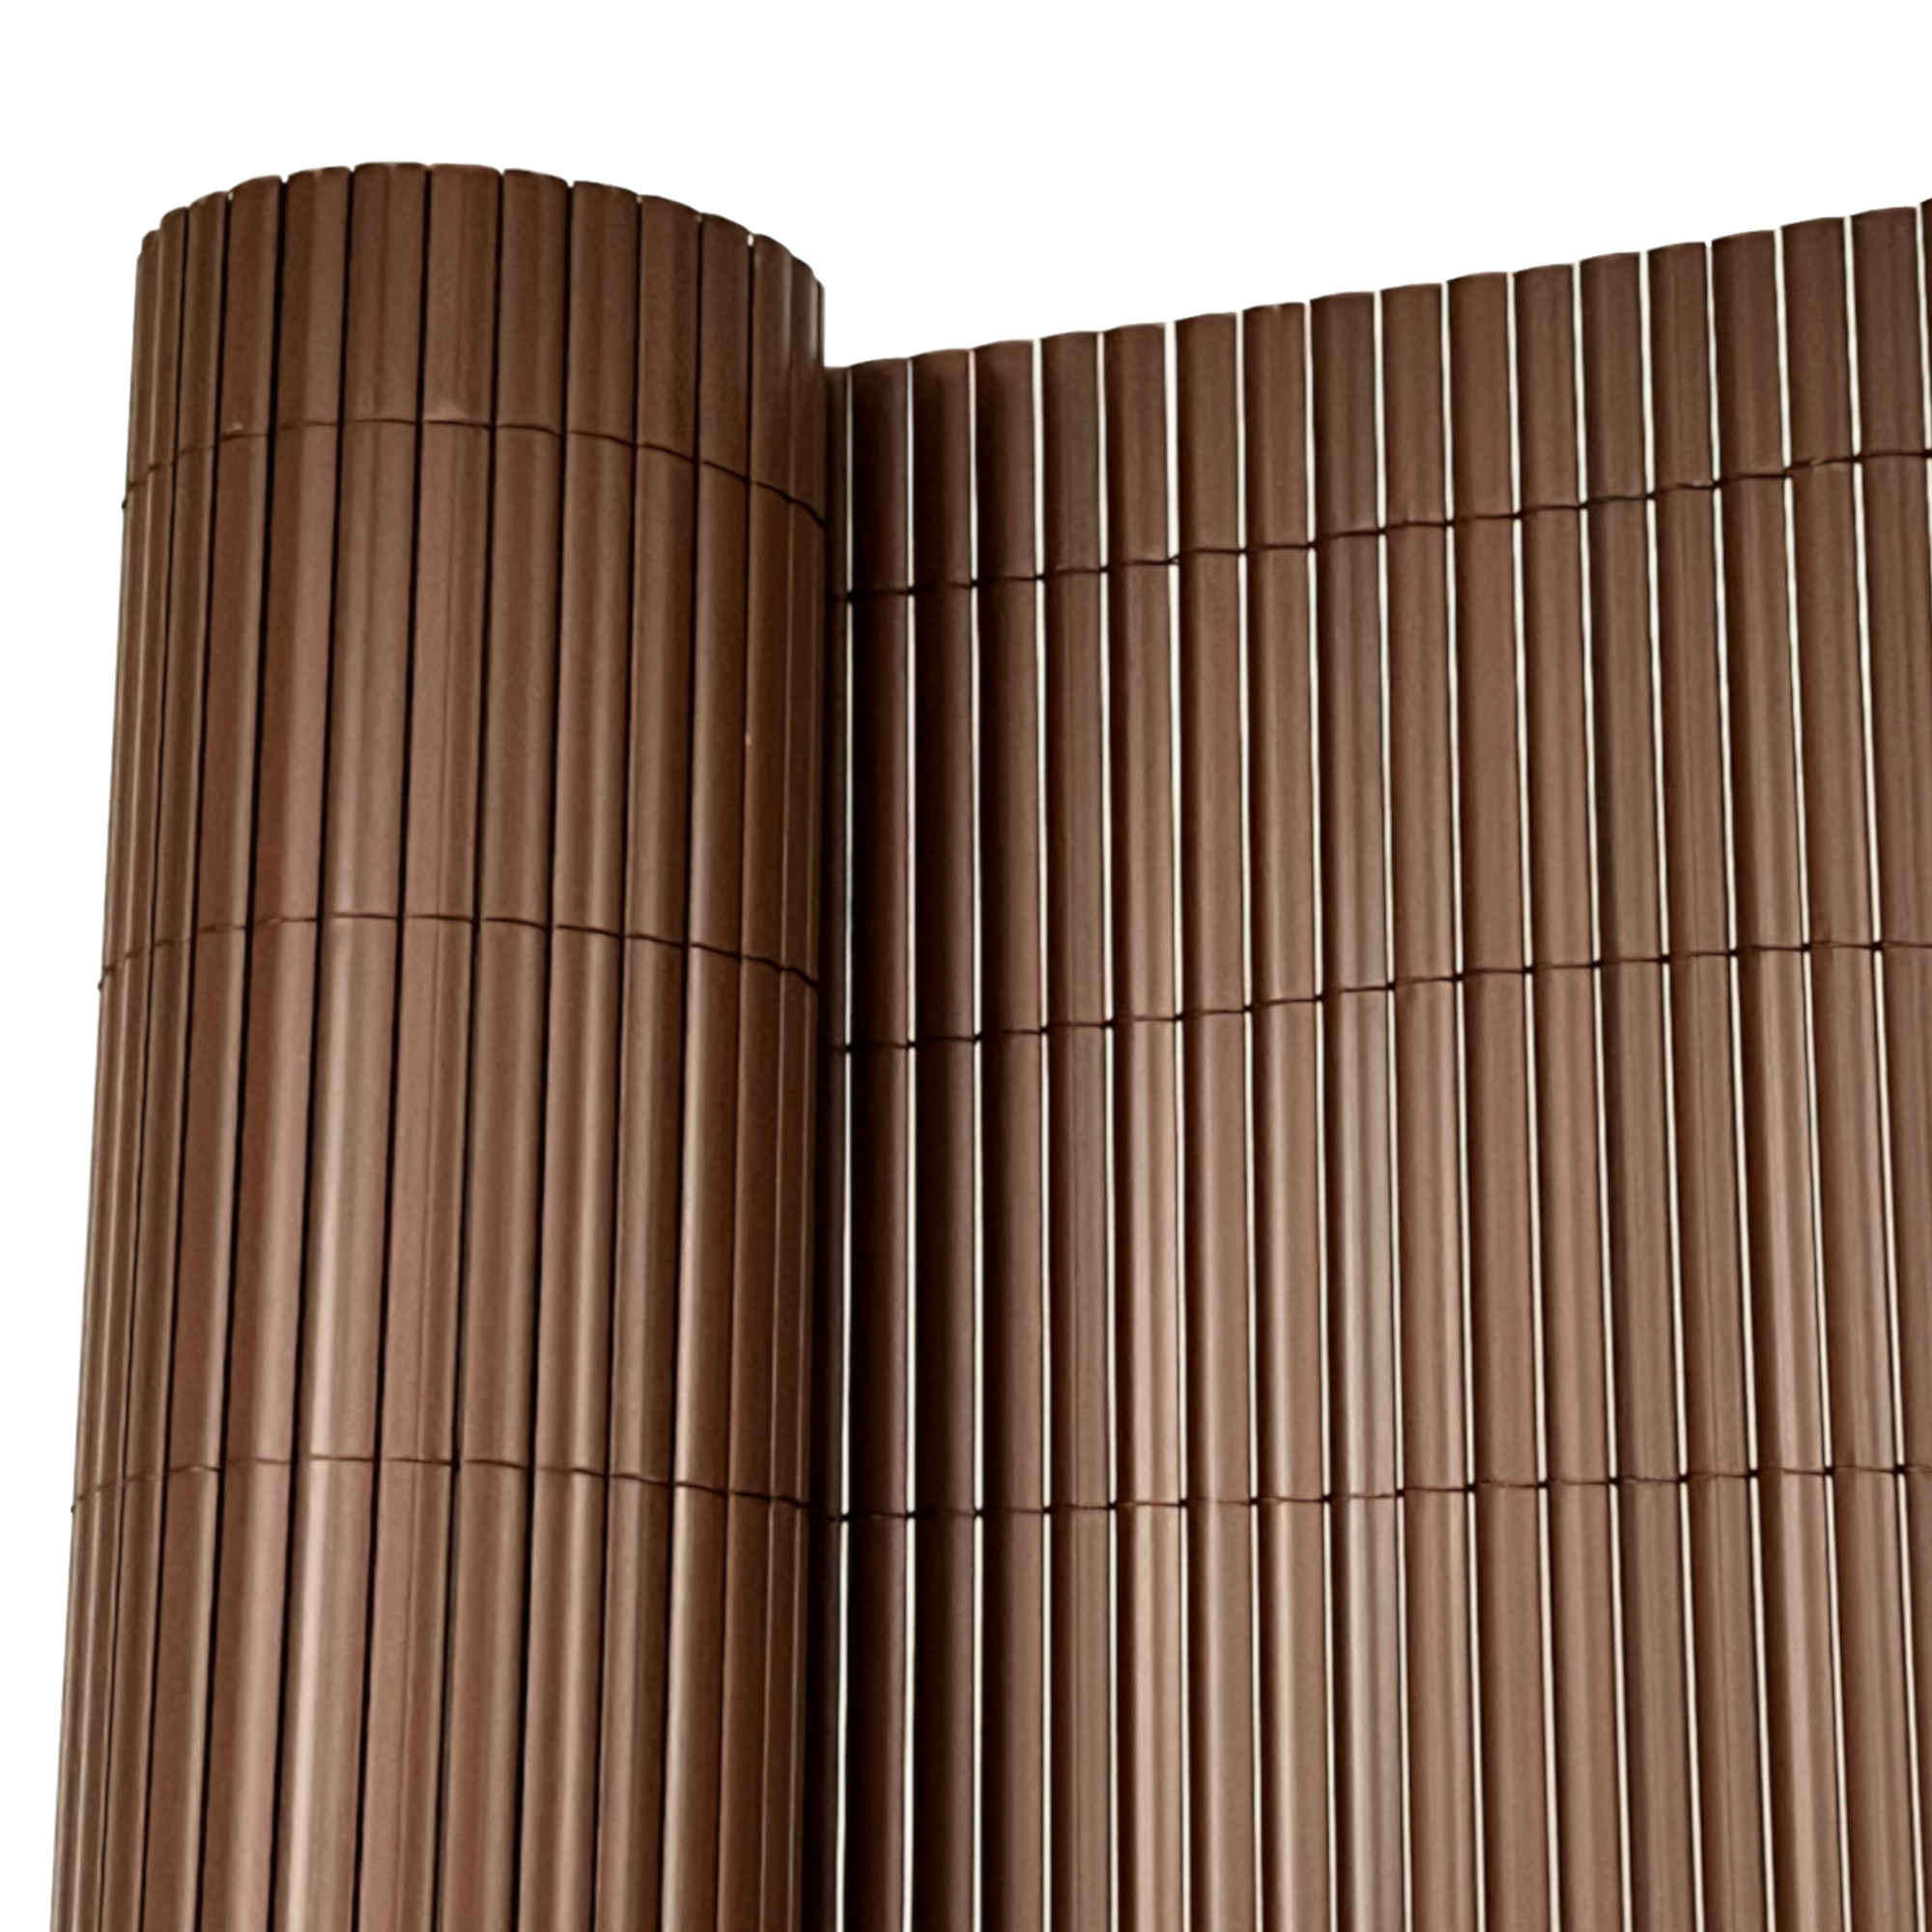 3m x 1.2m PVC Fencing (Brown)